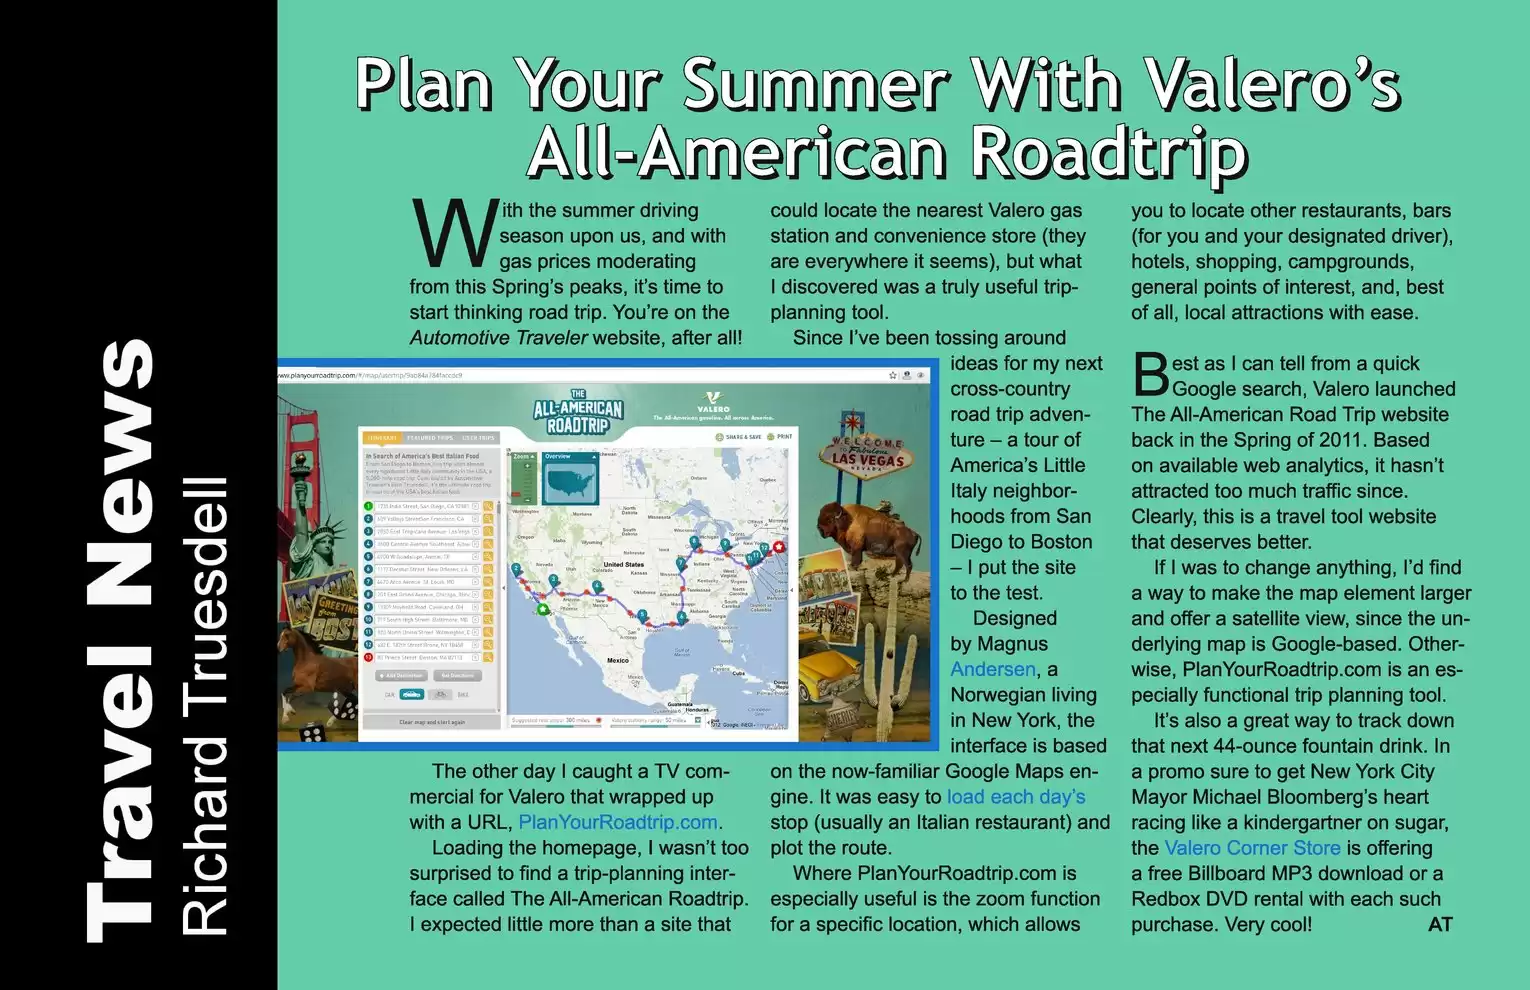 Automotive Traveler Magazine: 2012 06 Valero All-American Road Trip Page 1